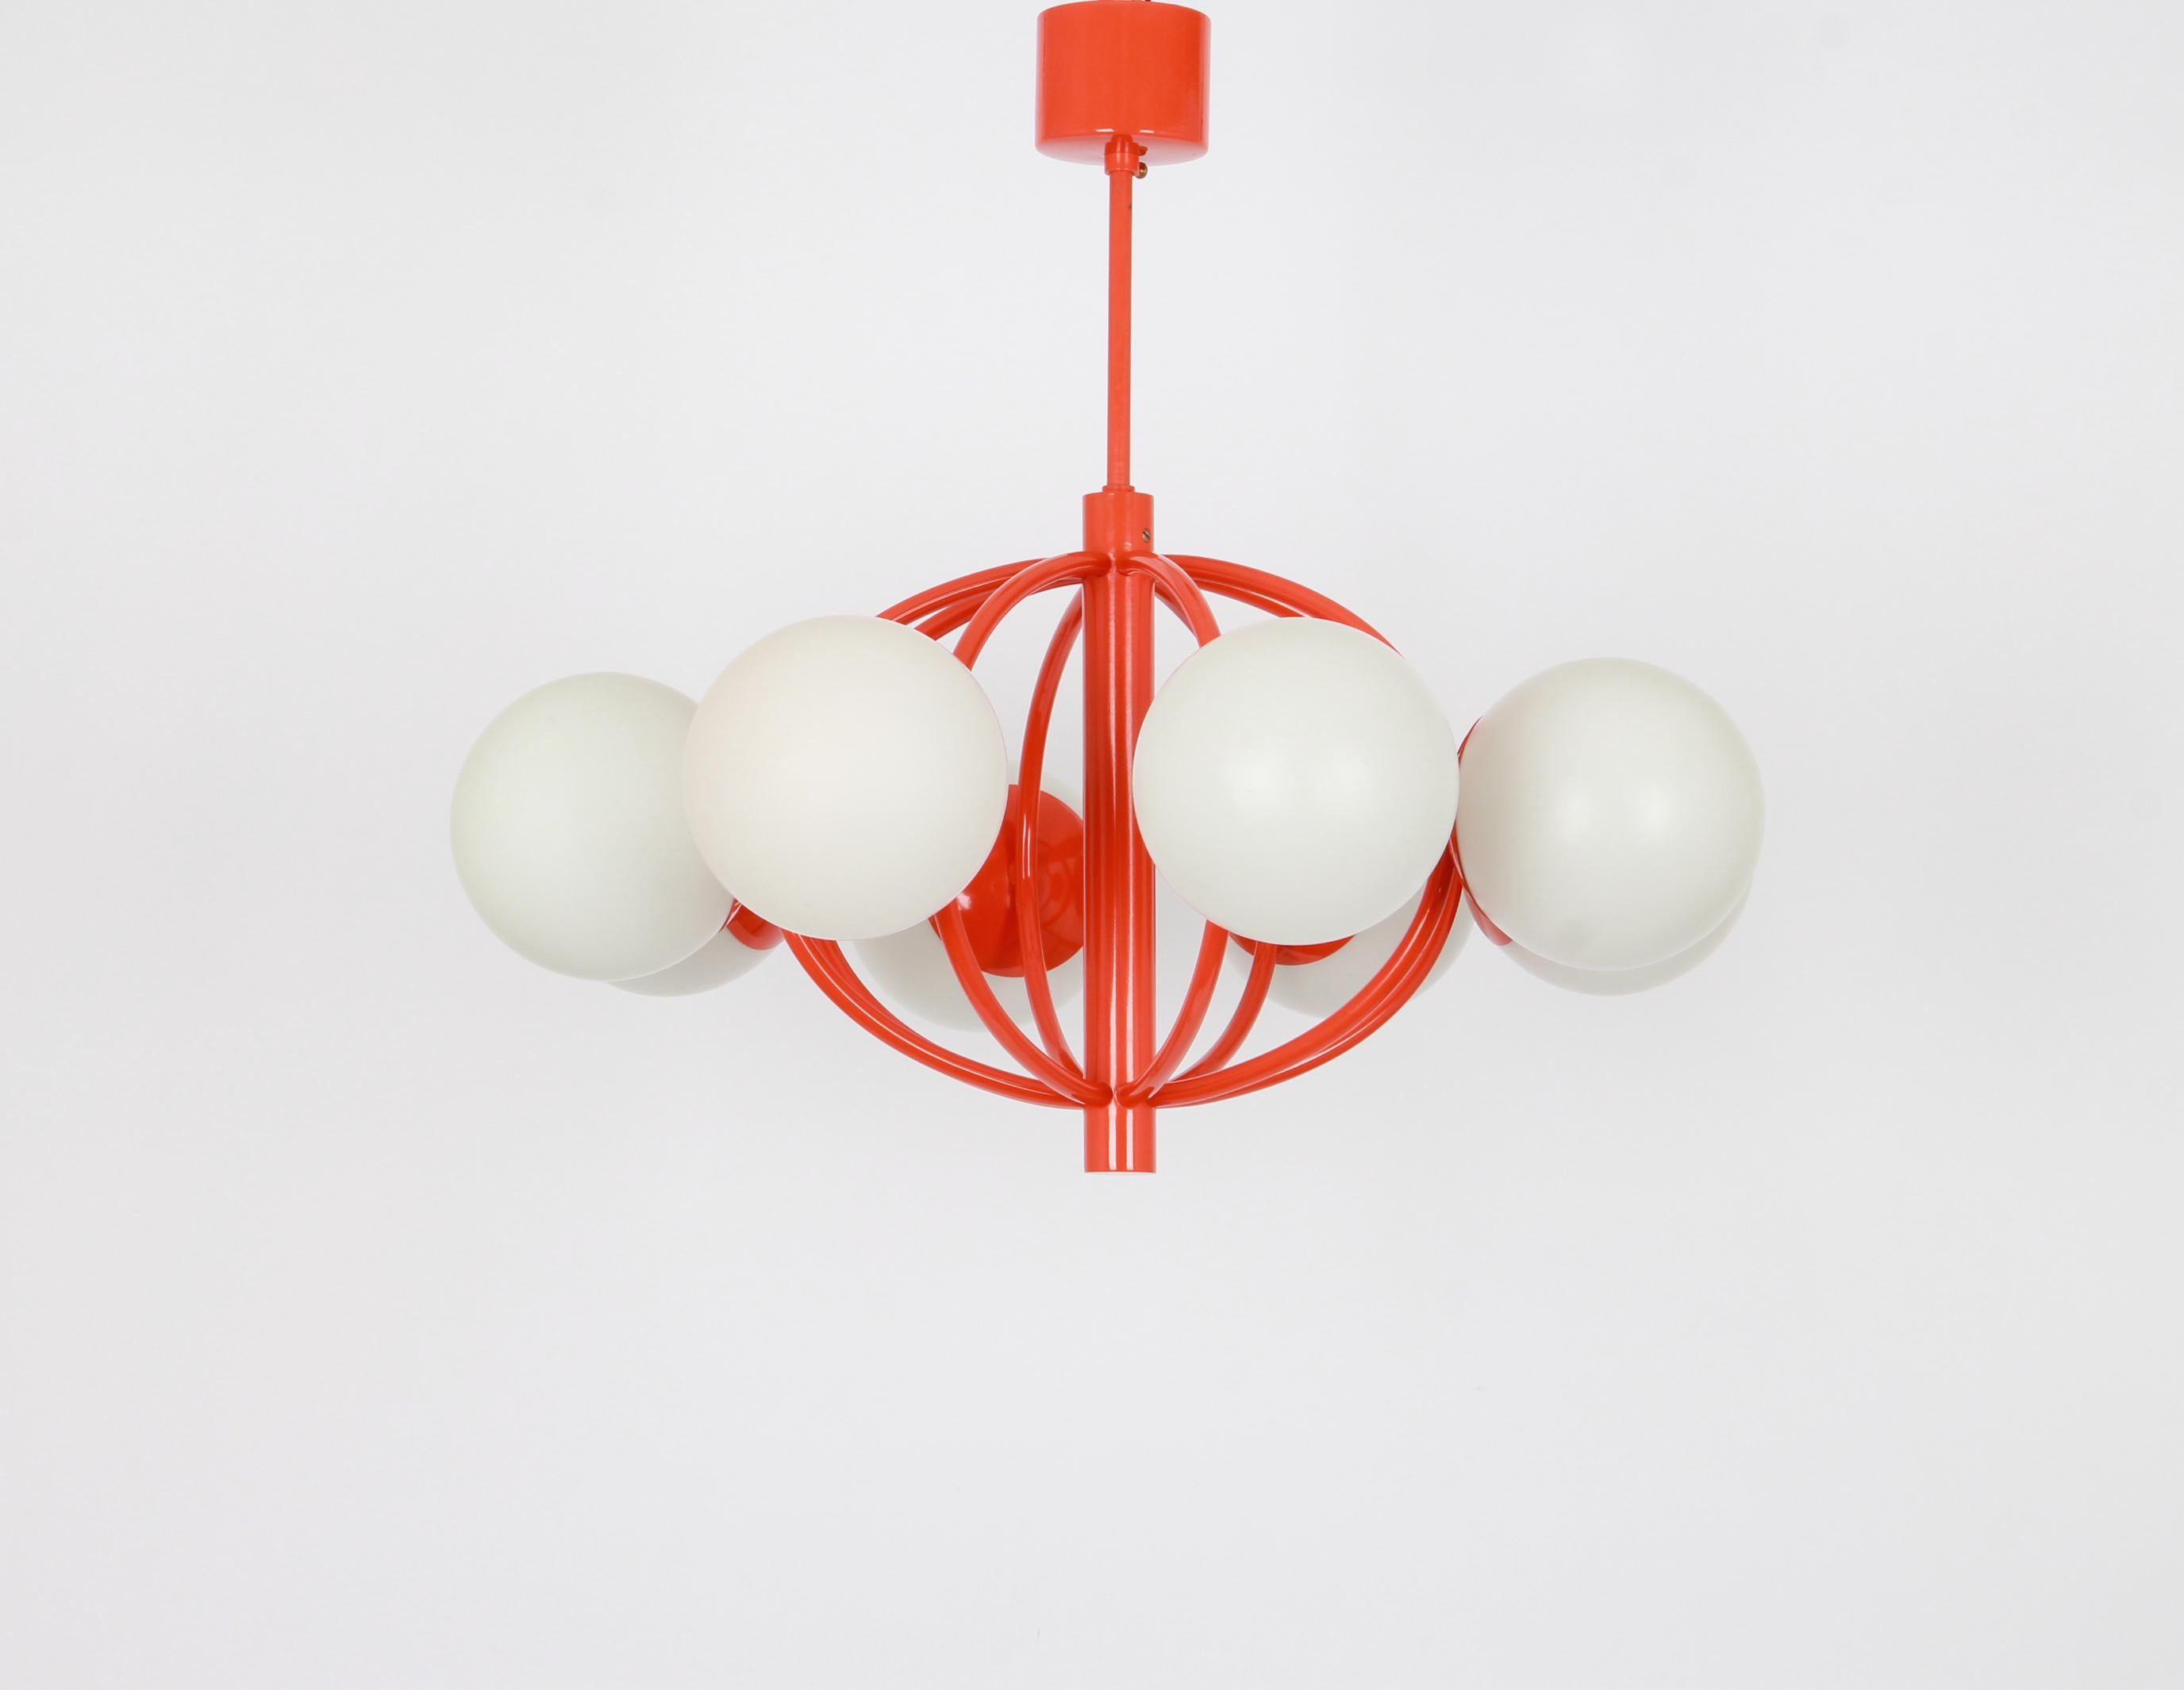 Midcentury Orbital Ceiling Lamp Pendant in Orange by Kaiser, Germany, 1960s For Sale 4